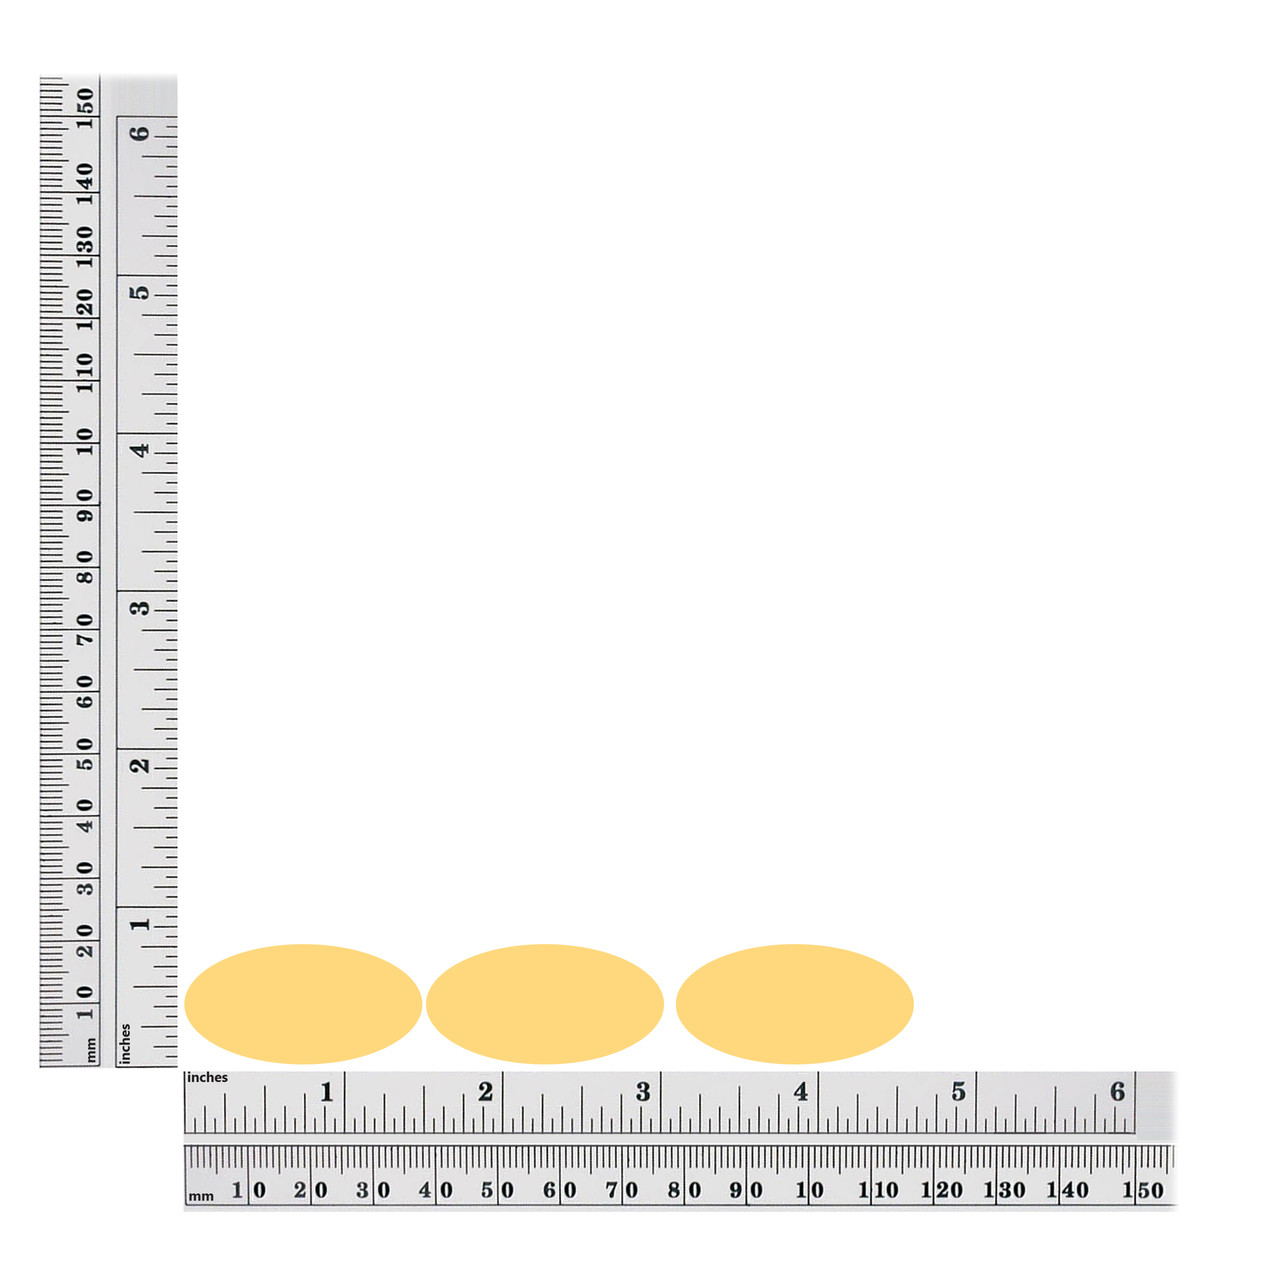 1.5 inch ellipse size chart